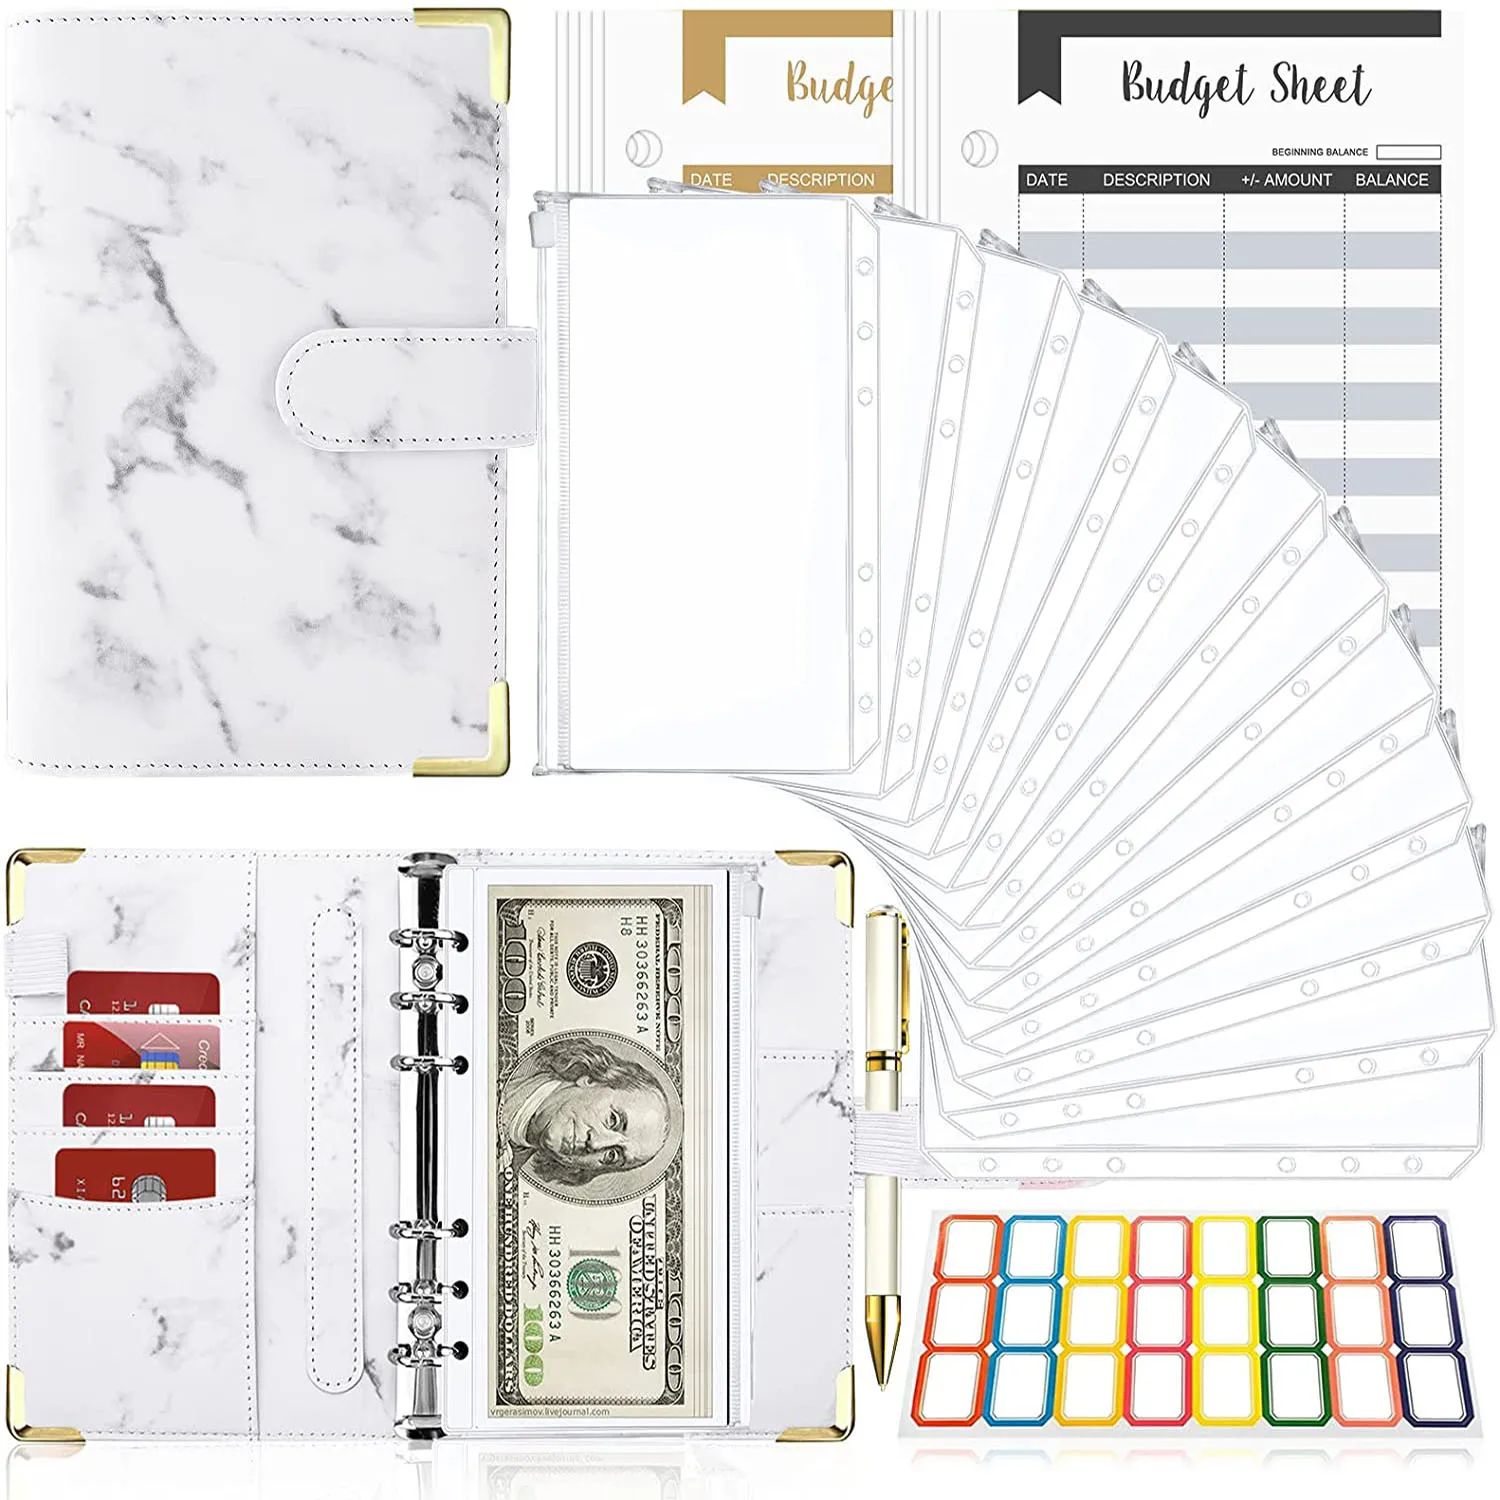 A6 Cash Envelopes Folder Planner Organizer,26 Pieces Budget Binder with Cash Envelopes,Budget Sheets for Money Budgeting Saving